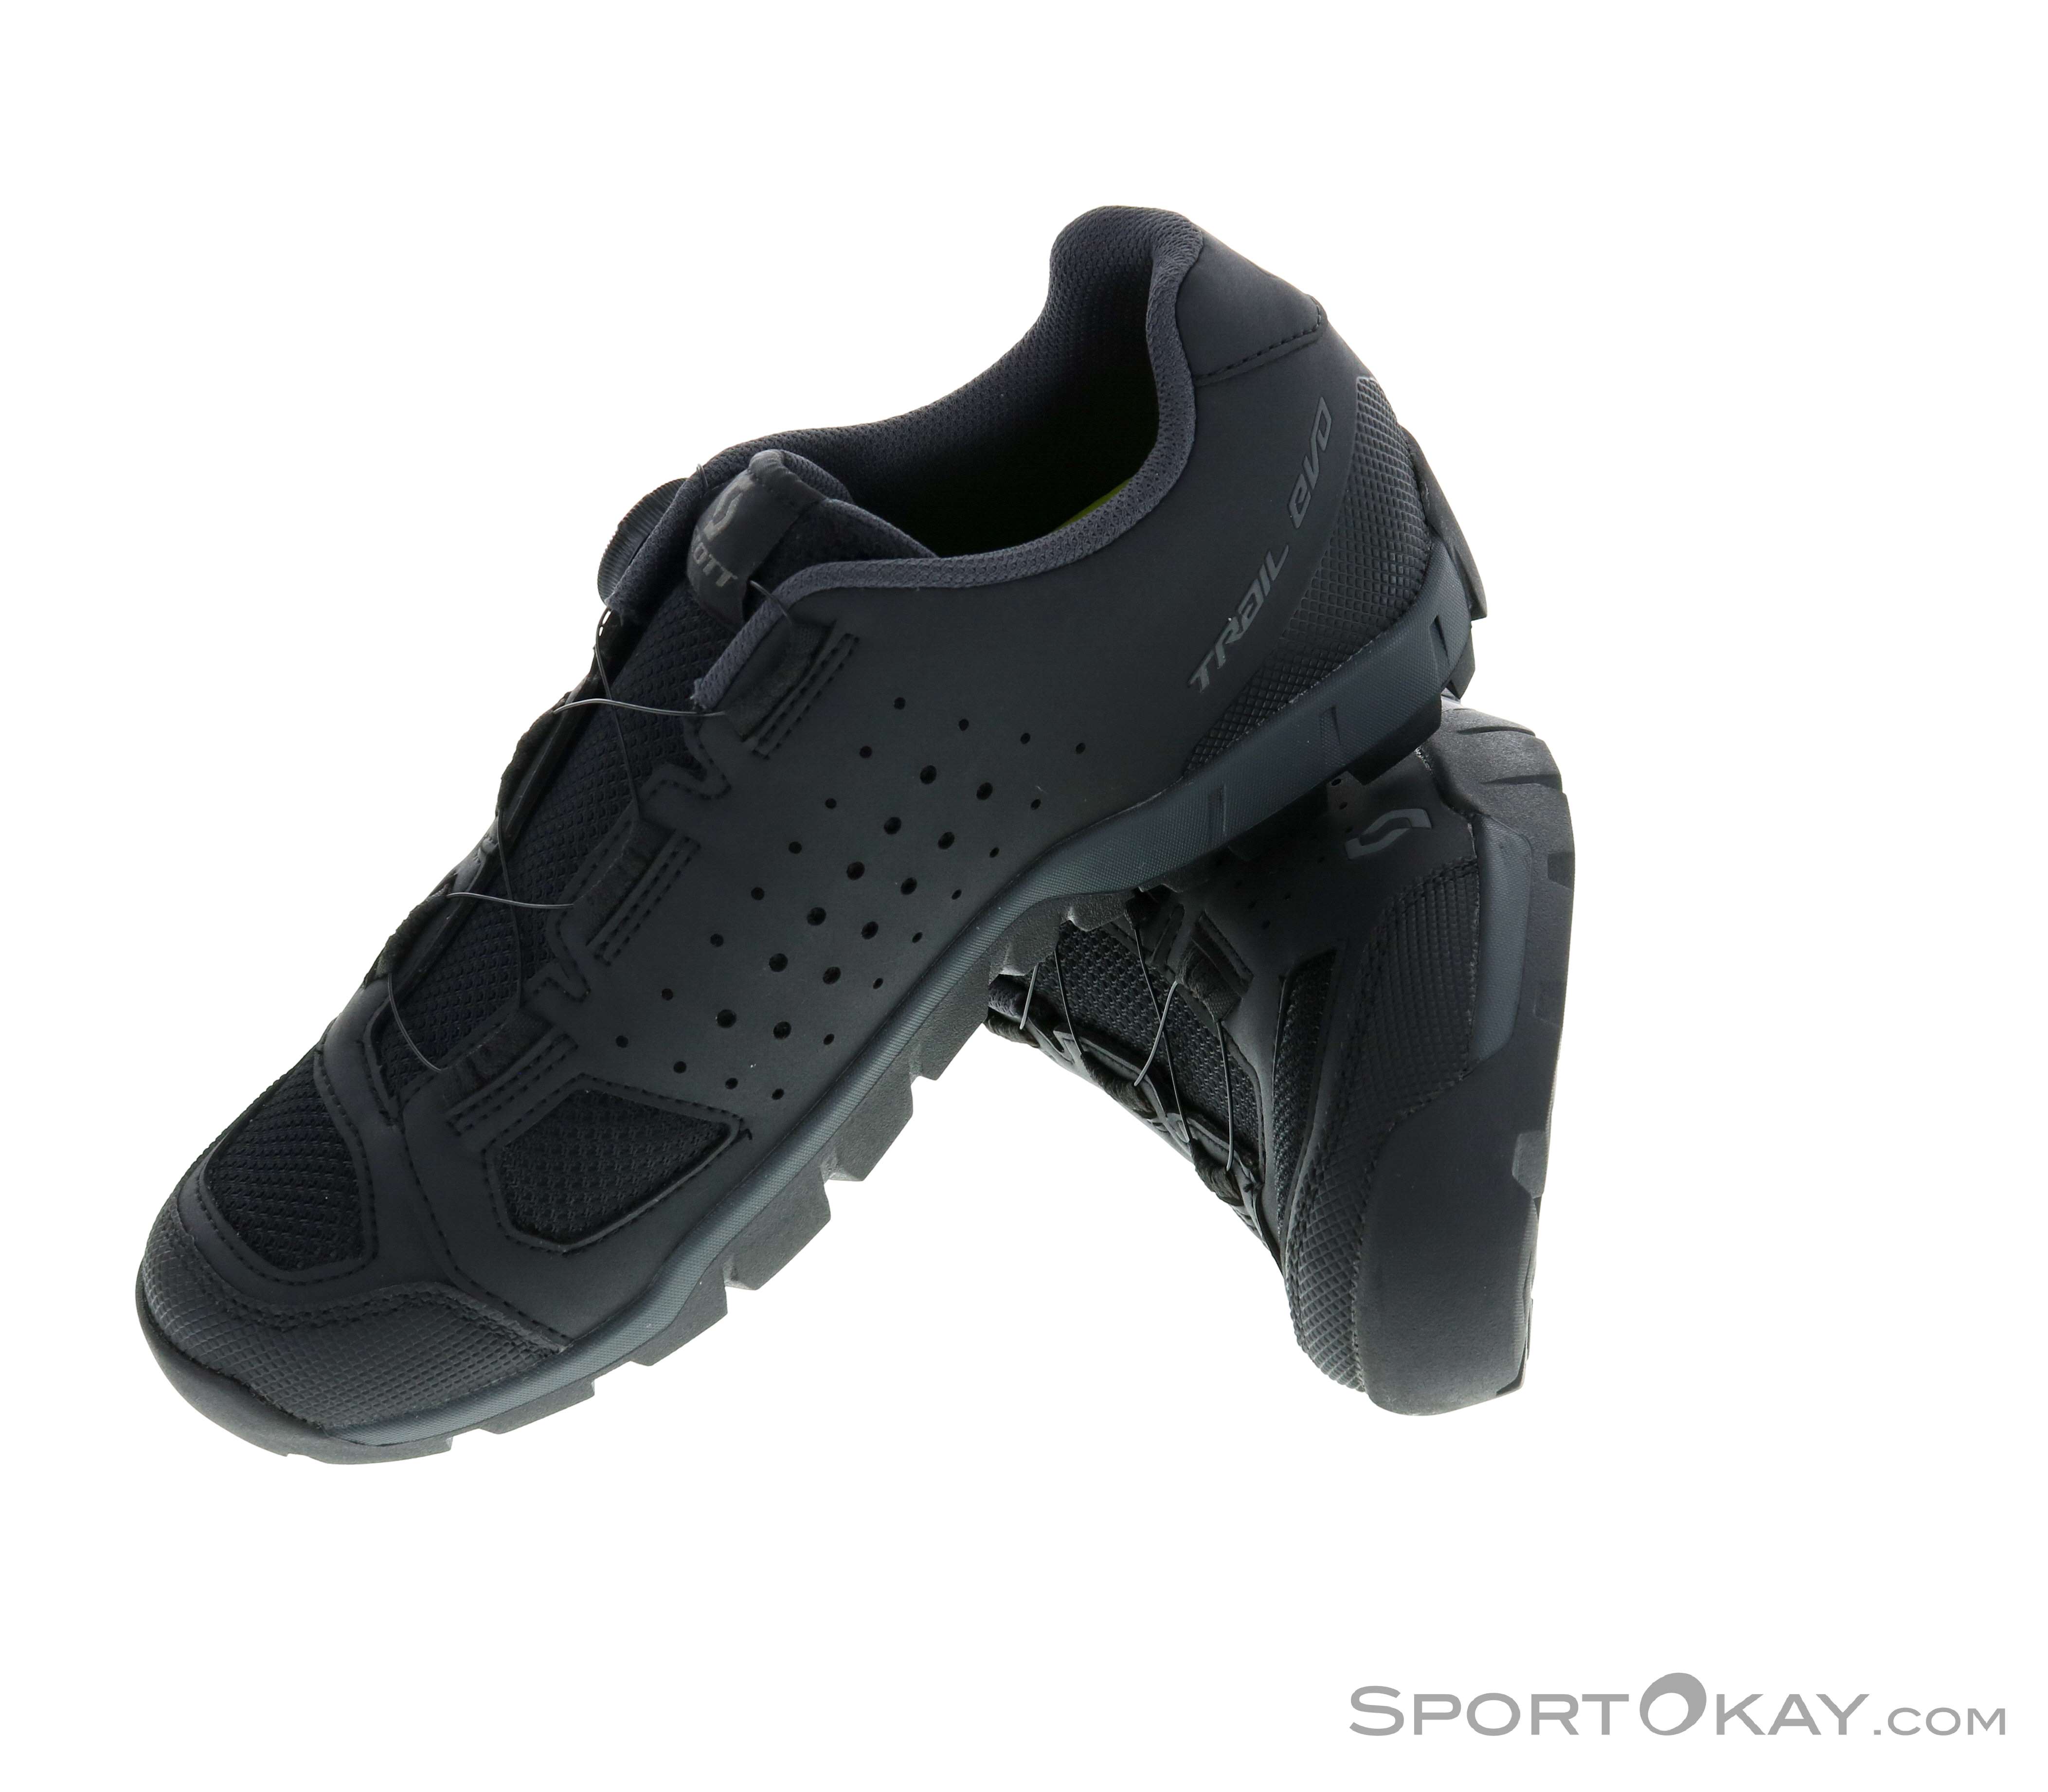 Chaussures SCOTT Sport Trail Evo GORE-TEX